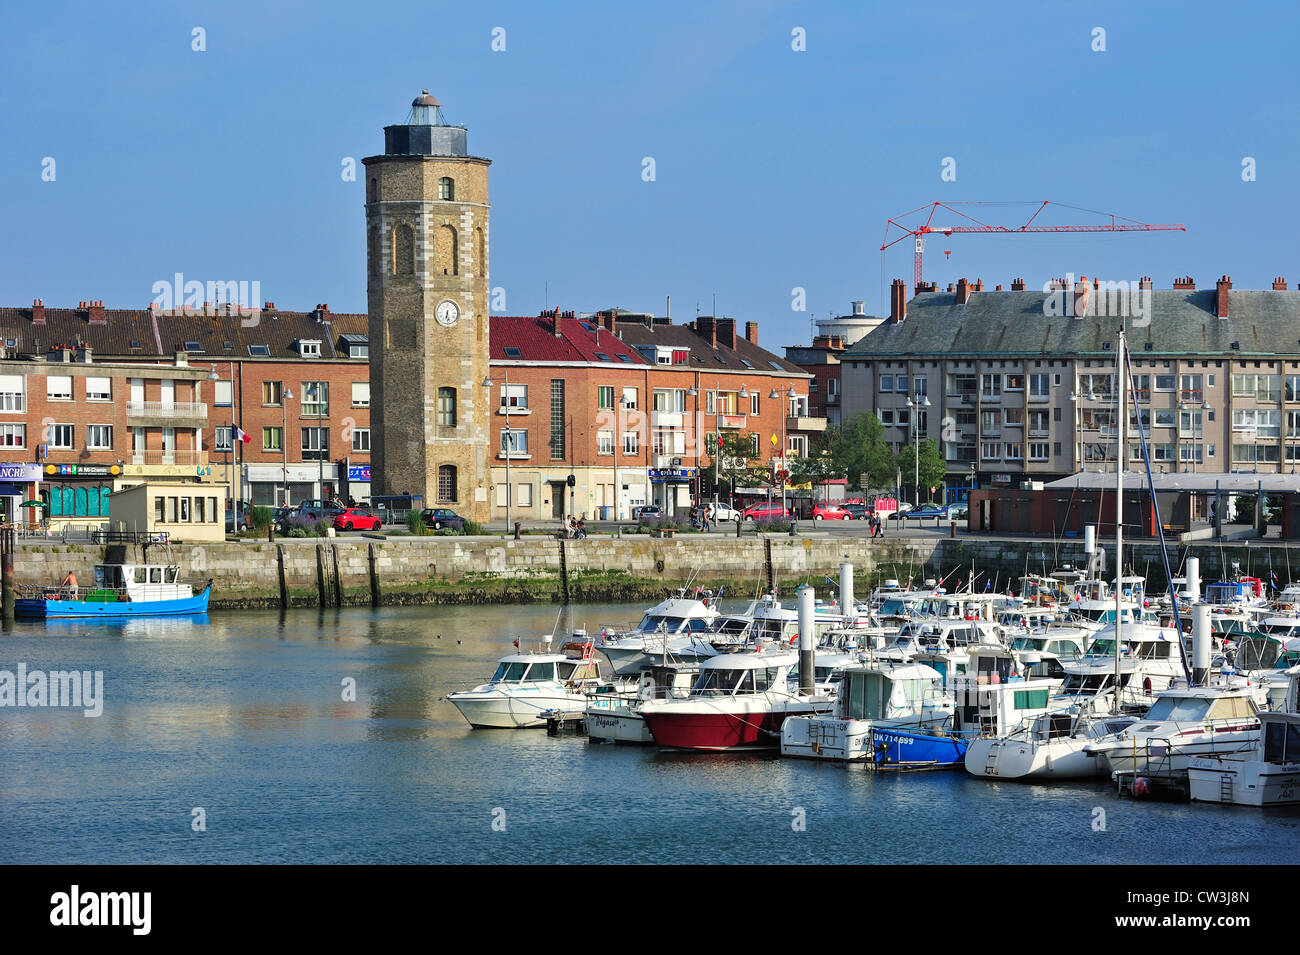 The Tour du Leughenaer / Liar's Tower in the harbour at Dunkirk / Dunkerque, Nord-Pas-de-Calais, France Stock Photo